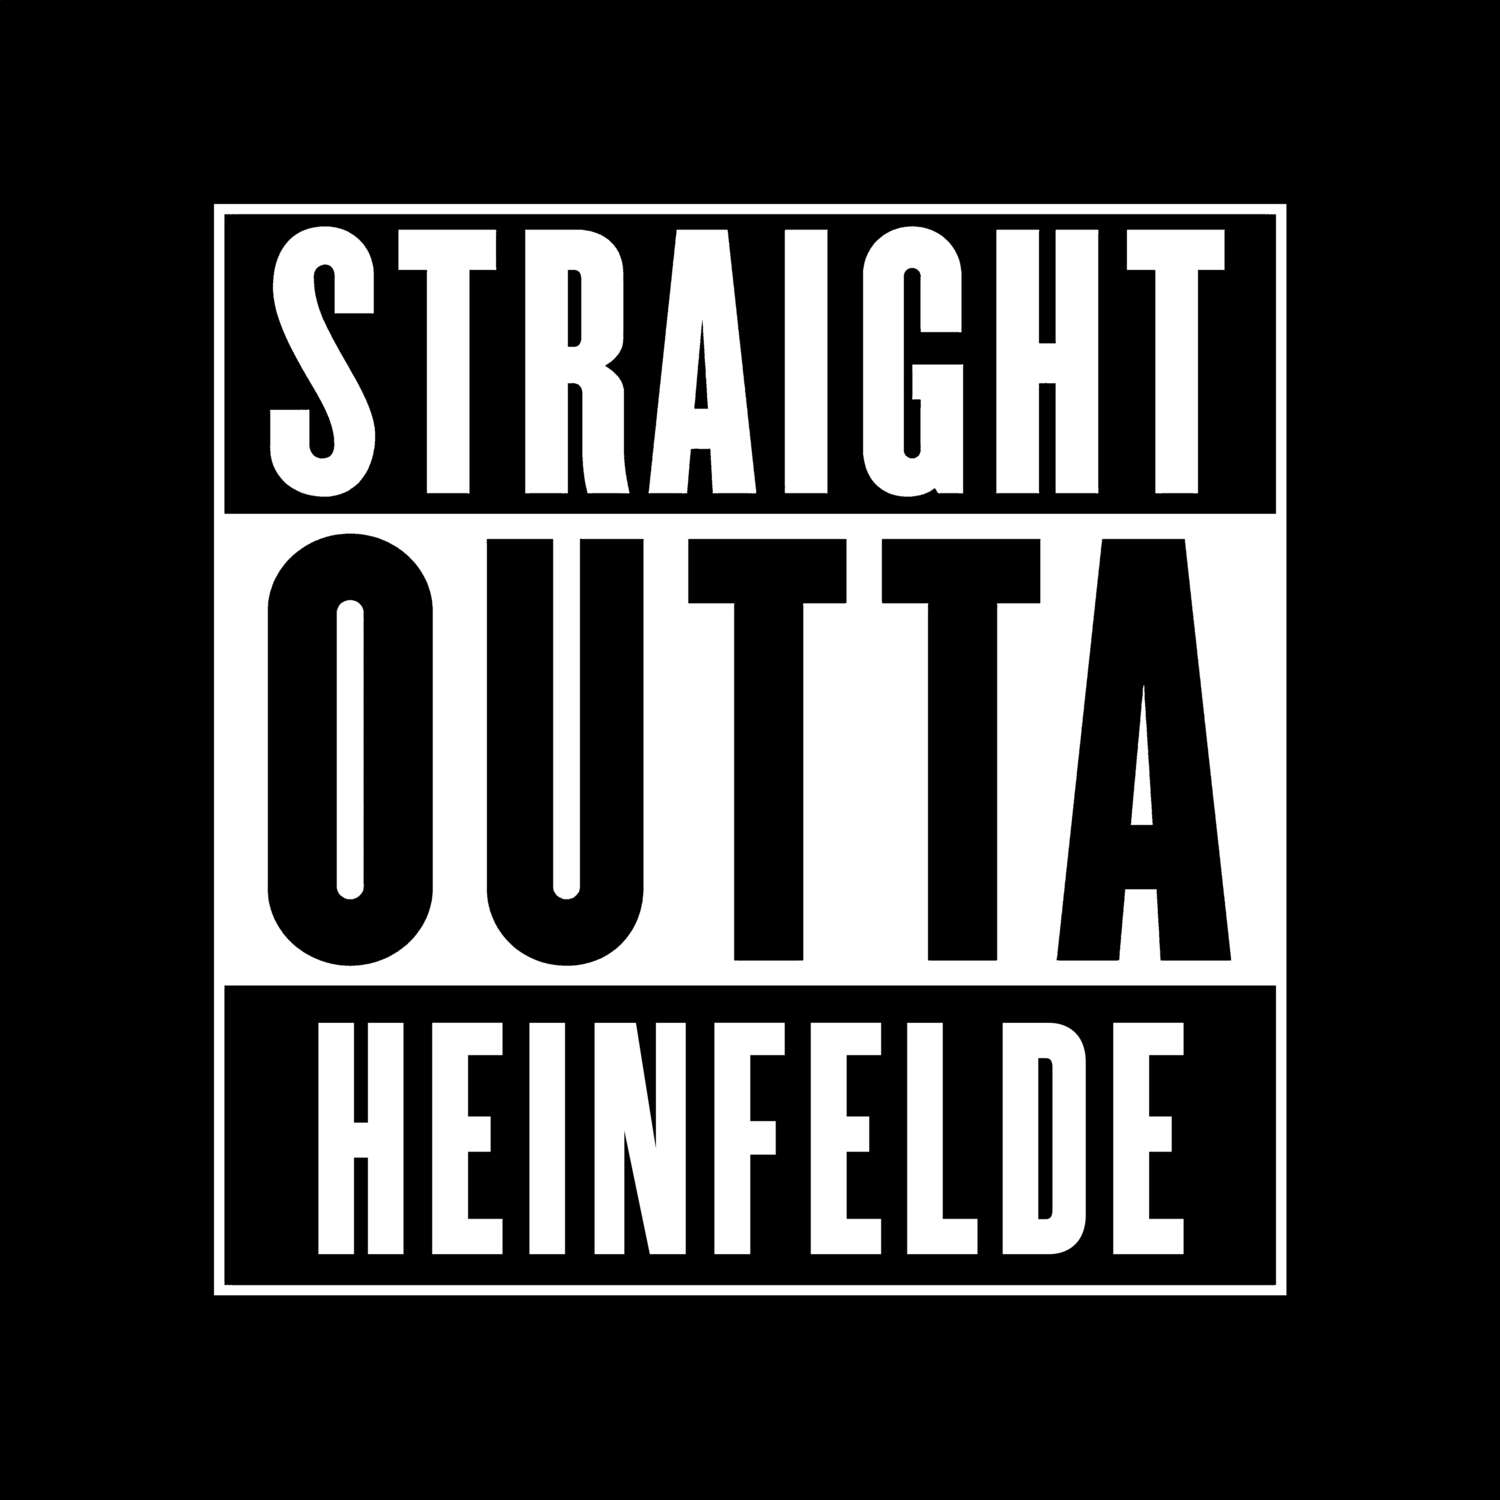 Heinfelde T-Shirt »Straight Outta«